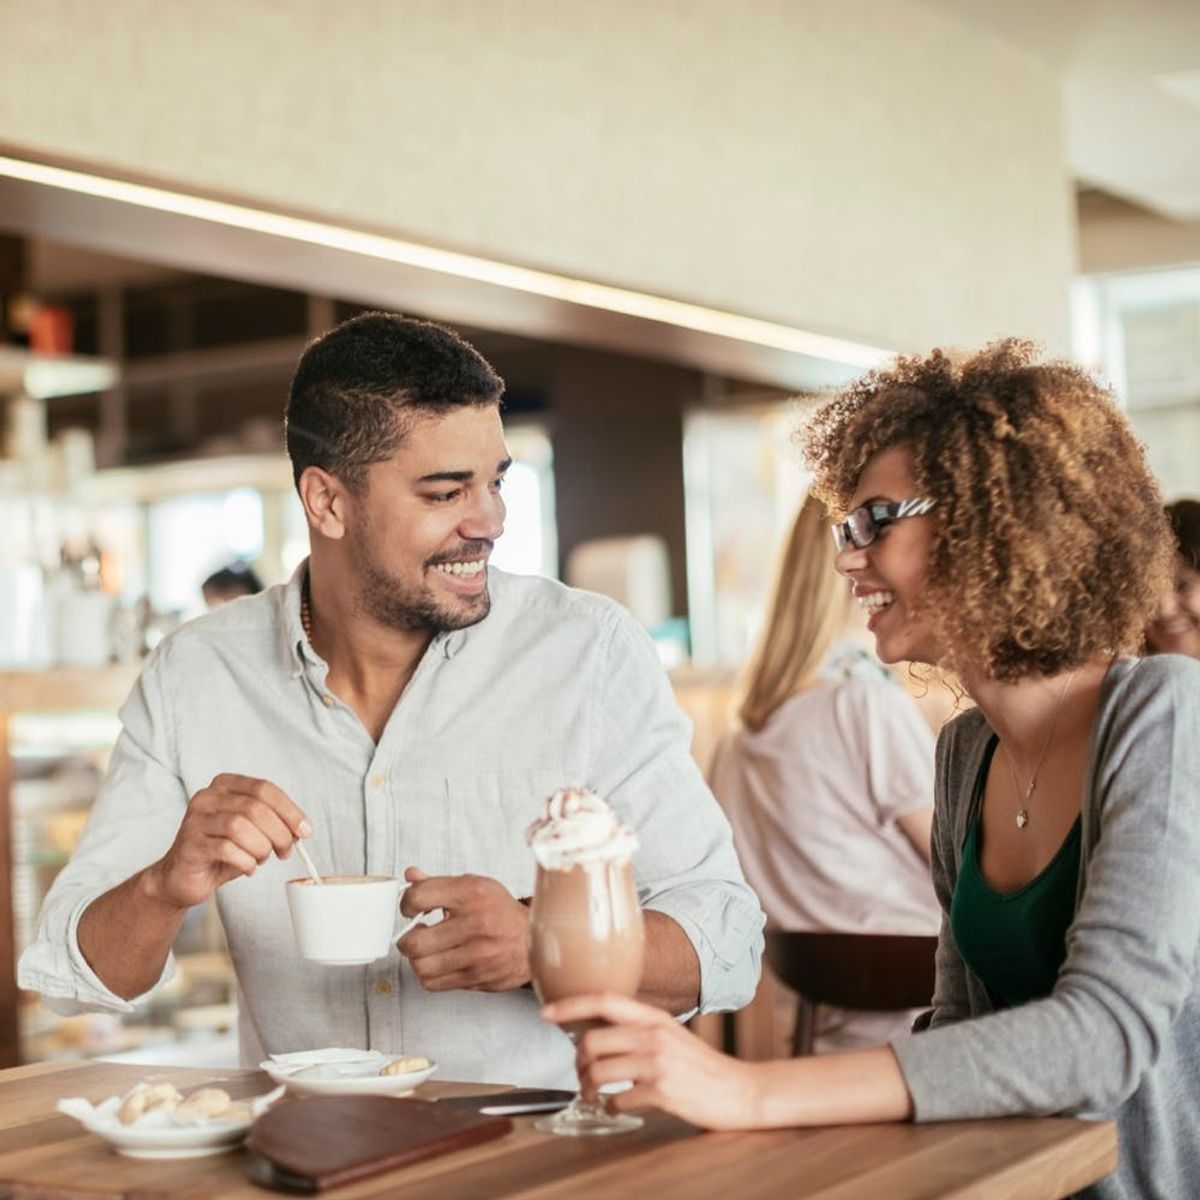 5 Conversation Tips to Make a First Date Less Awkward